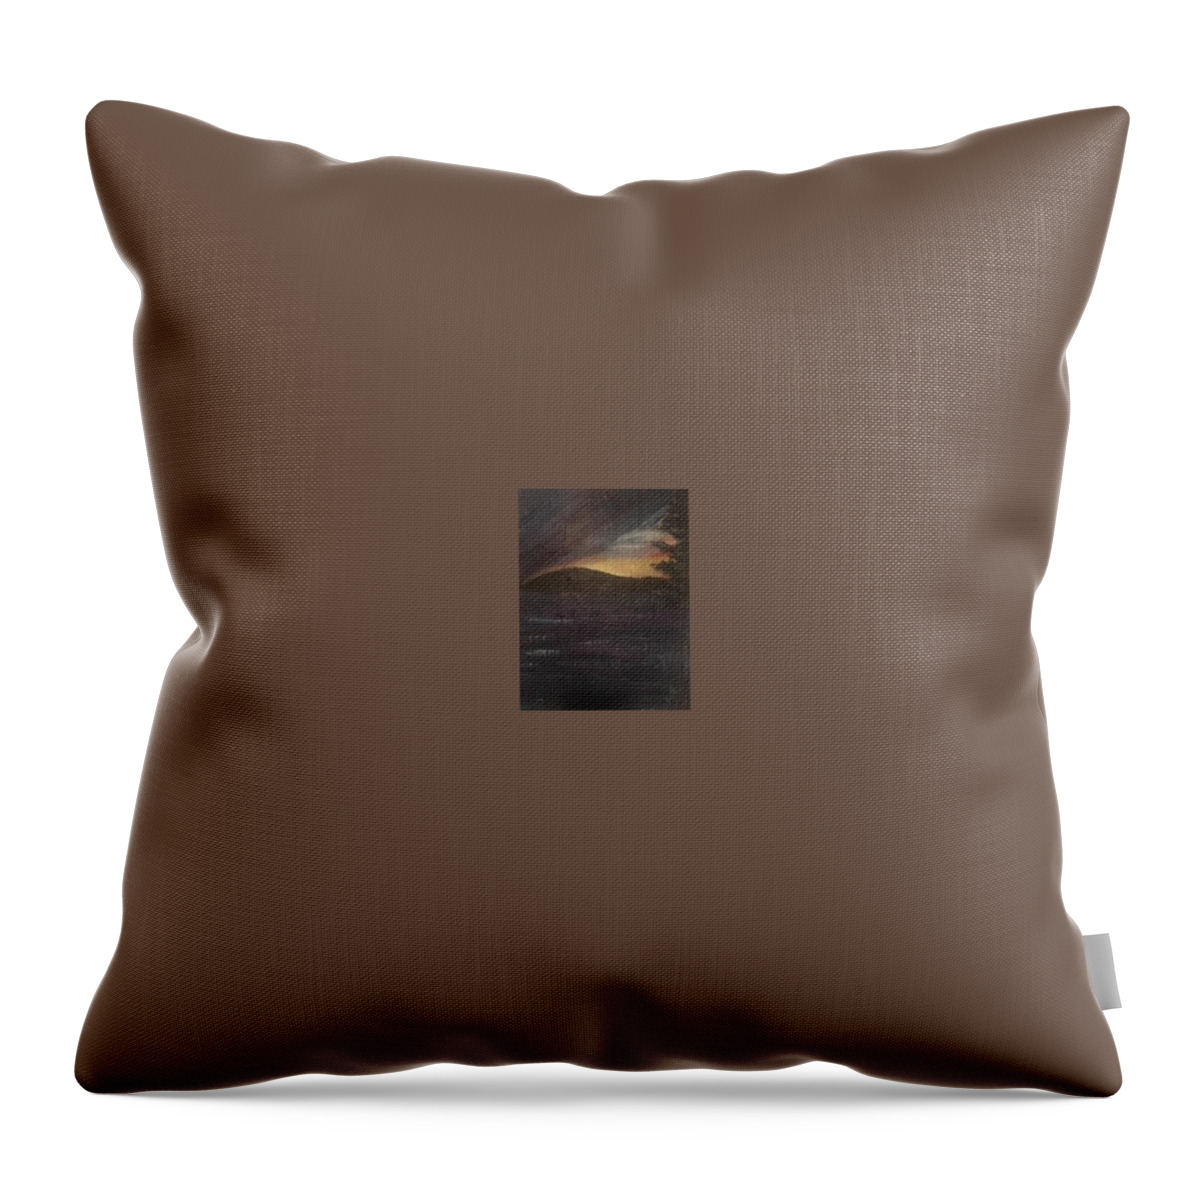 Sunset Throw Pillow featuring the painting Upcoming Hope - Sunset by Nina Jatania